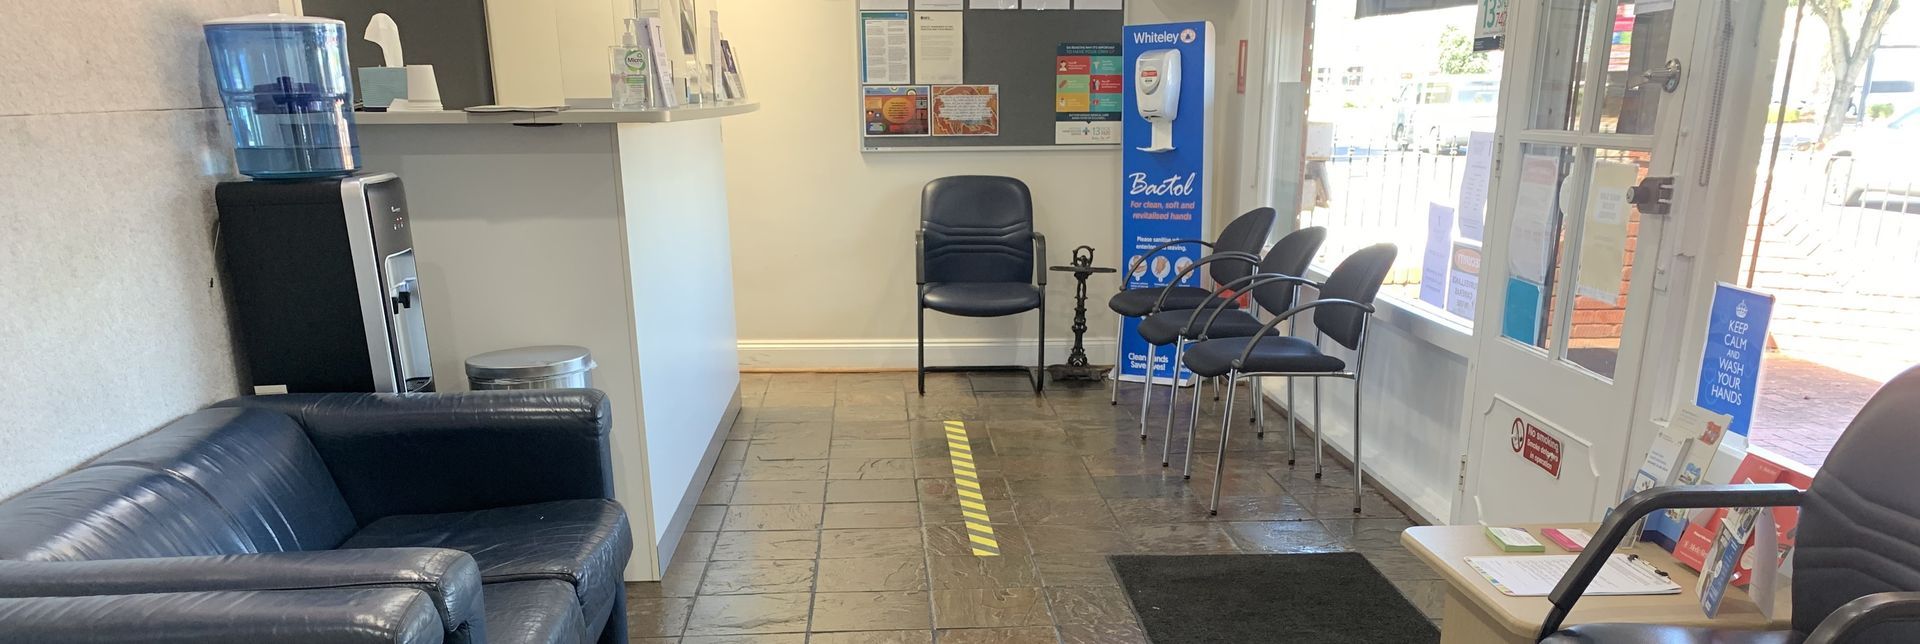 Tranmere Village Medical Centre
Reception & Waiting Area